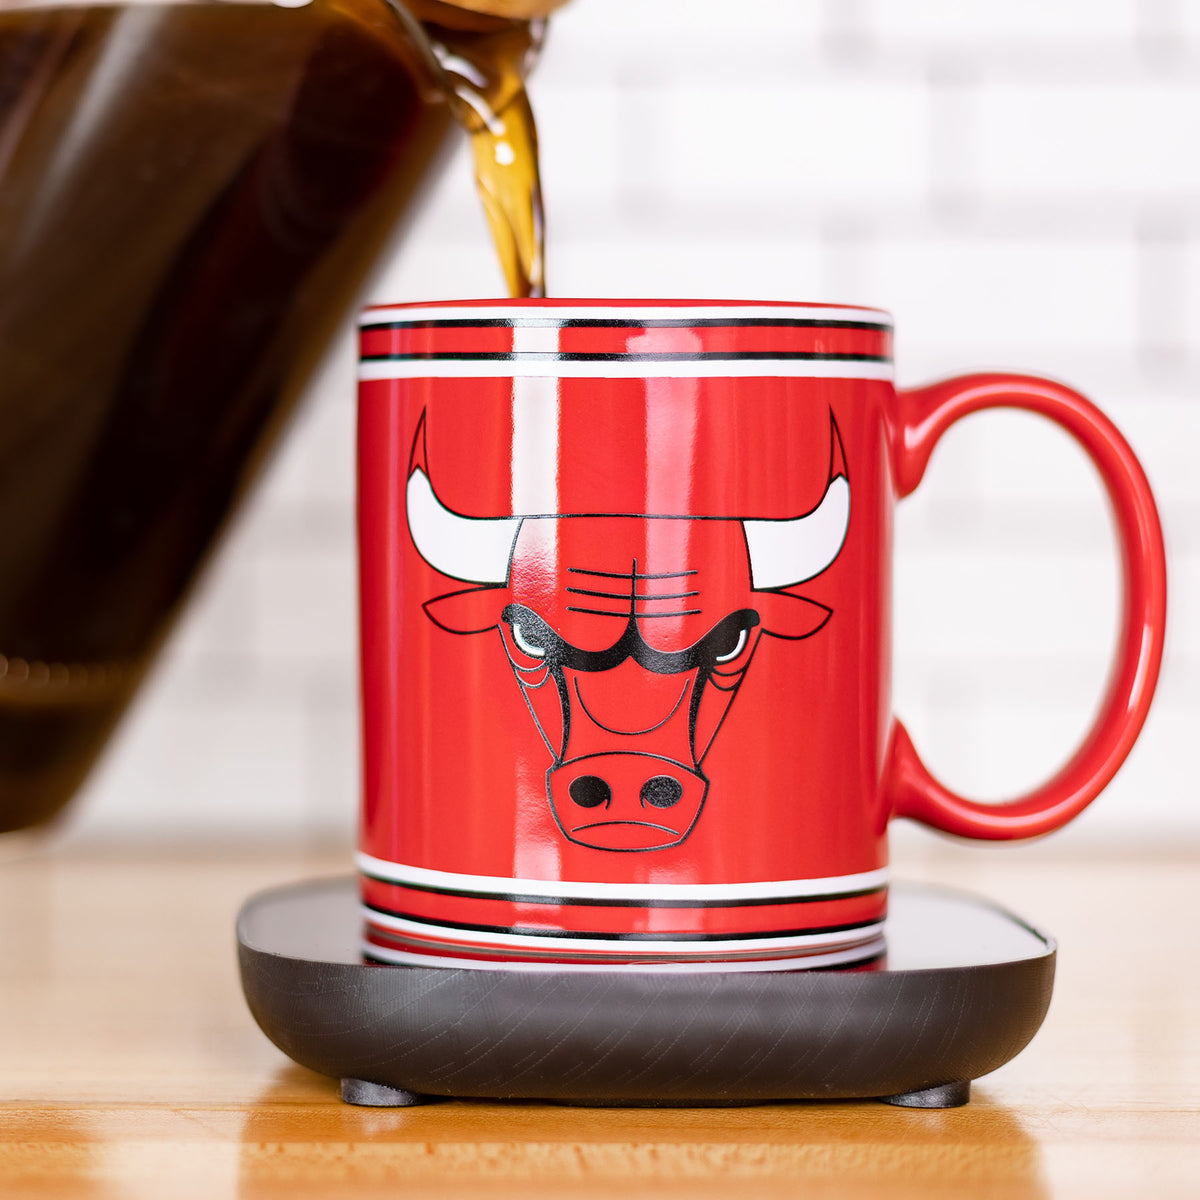  Uncanny Brands NBA Milwaukee Bucks Logo Mug Warmer with Mug –  Keeps Your Favorite Beverage Warm - Auto Shut On/Off: Home & Kitchen